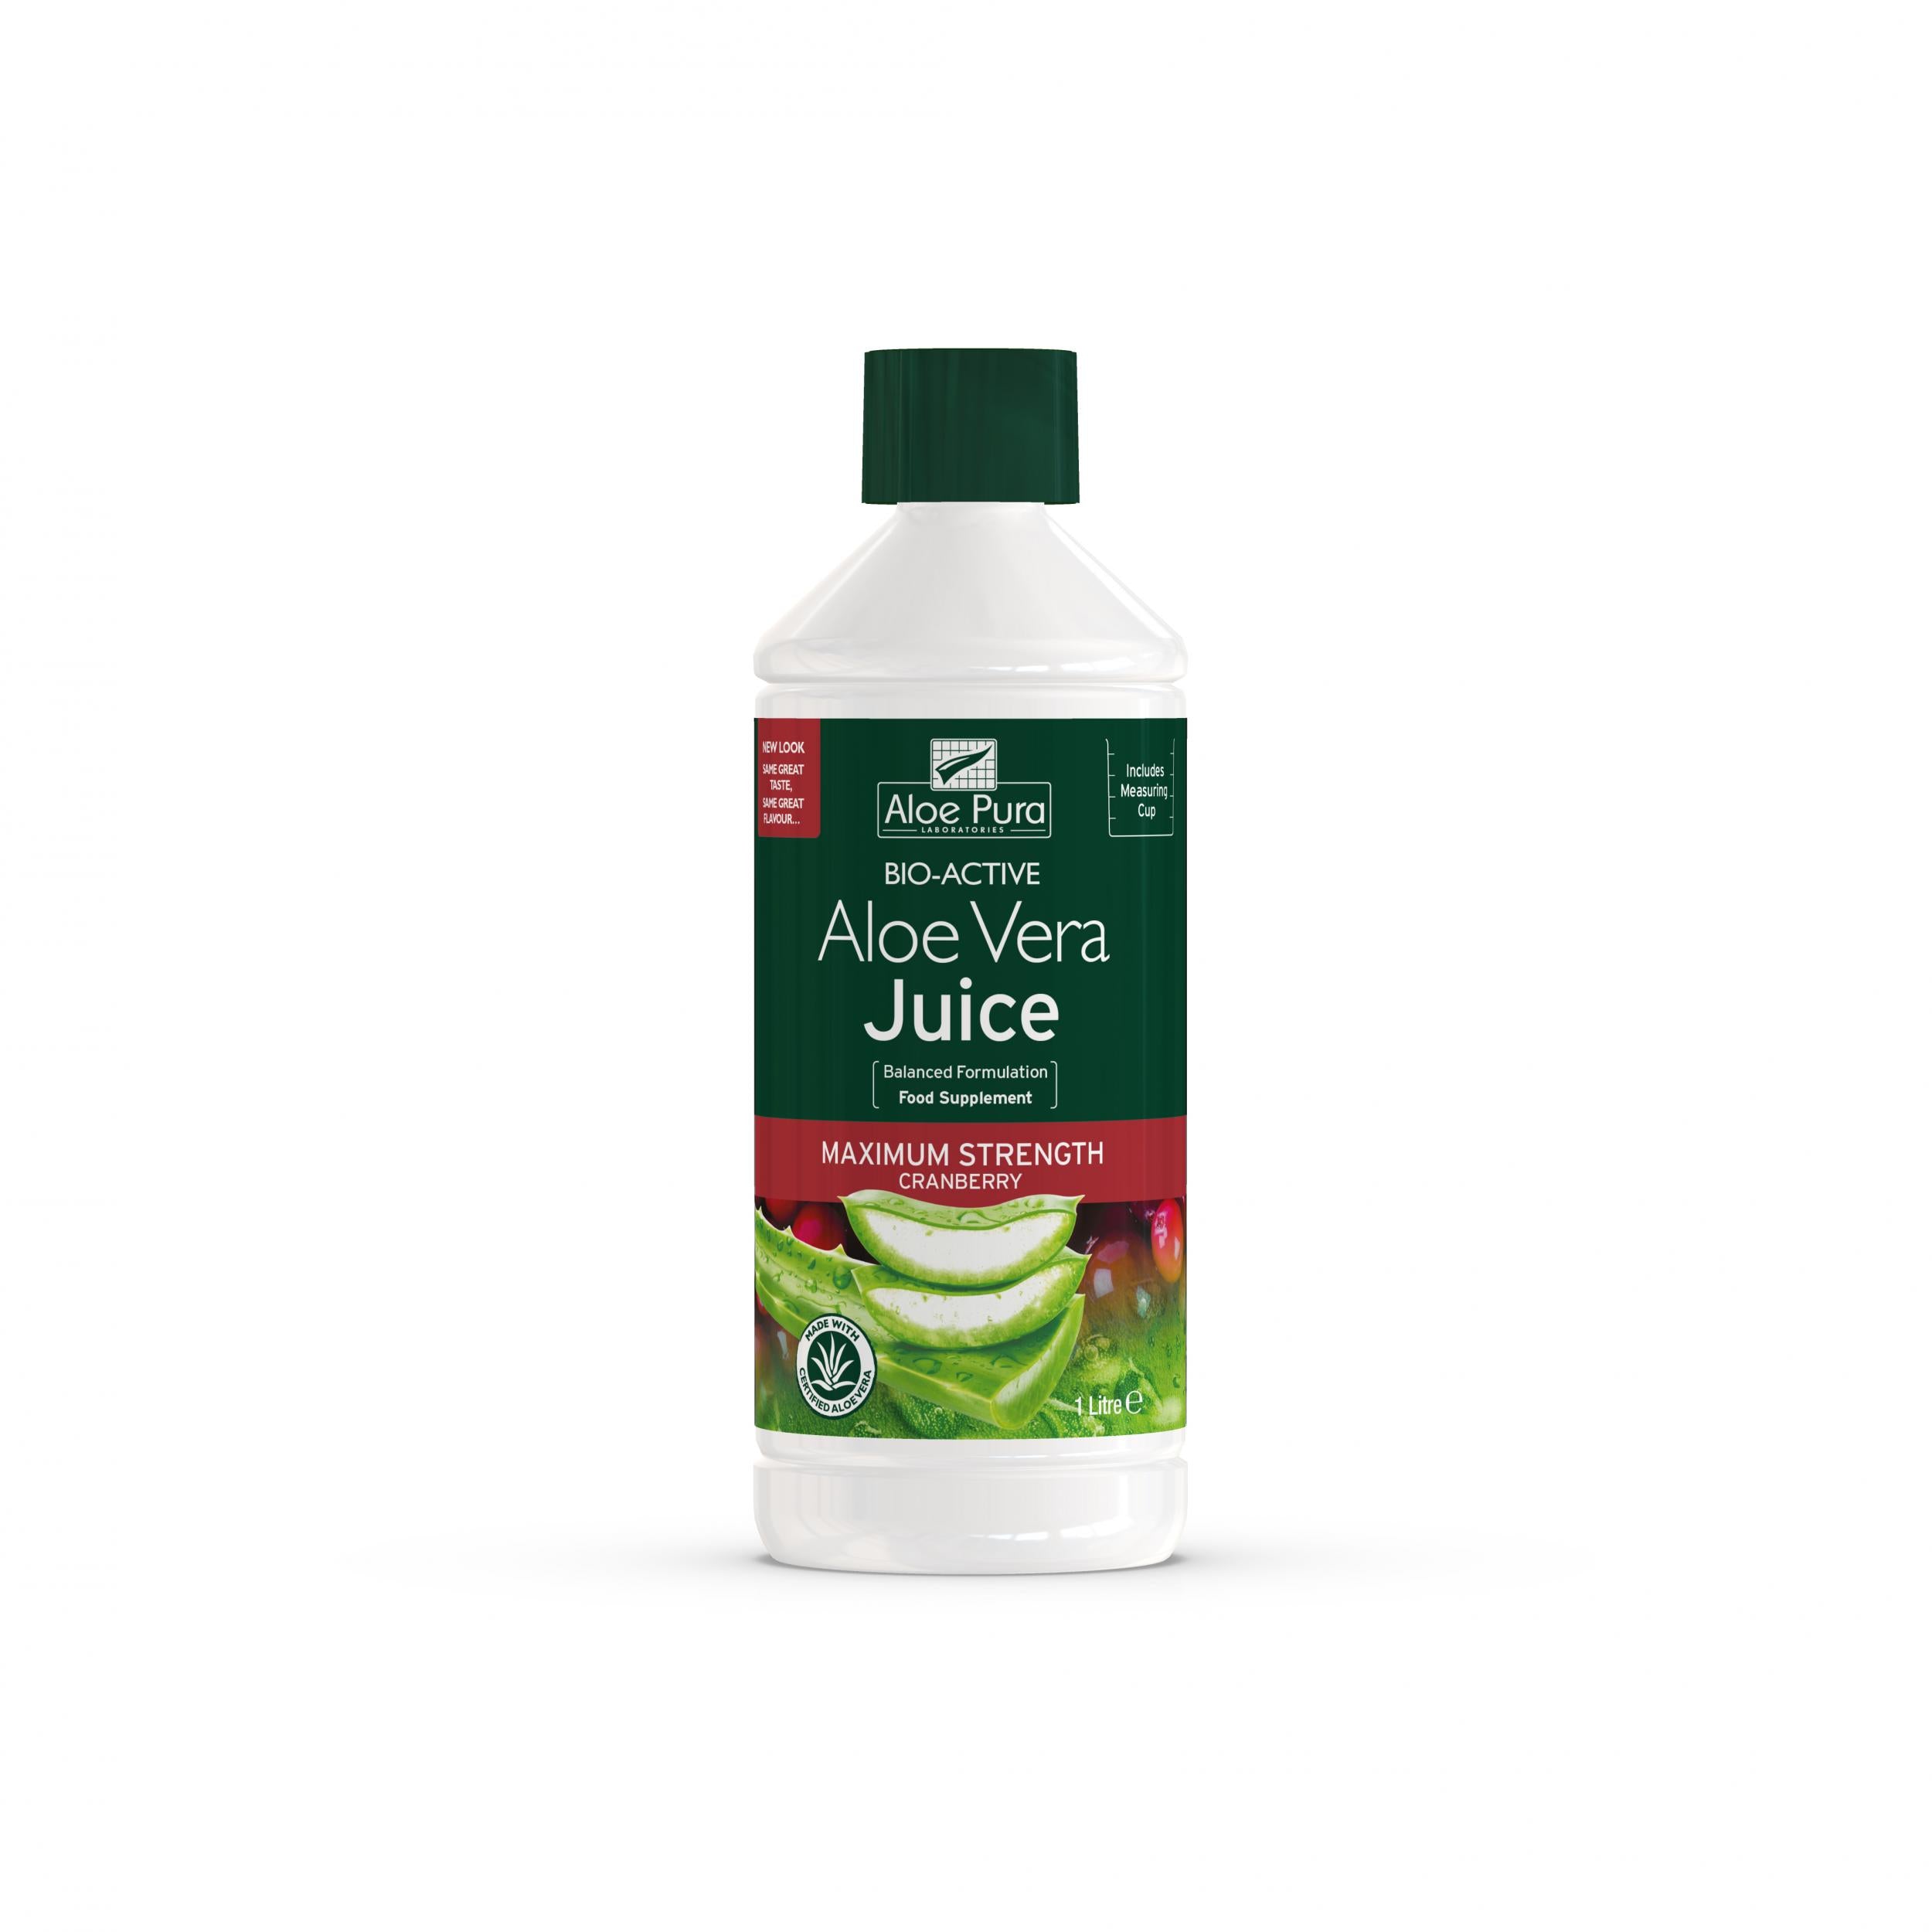 Aloe Pura Bio-Active Aloe Vera Juice Maximum Strength Cranberry 1 Litre